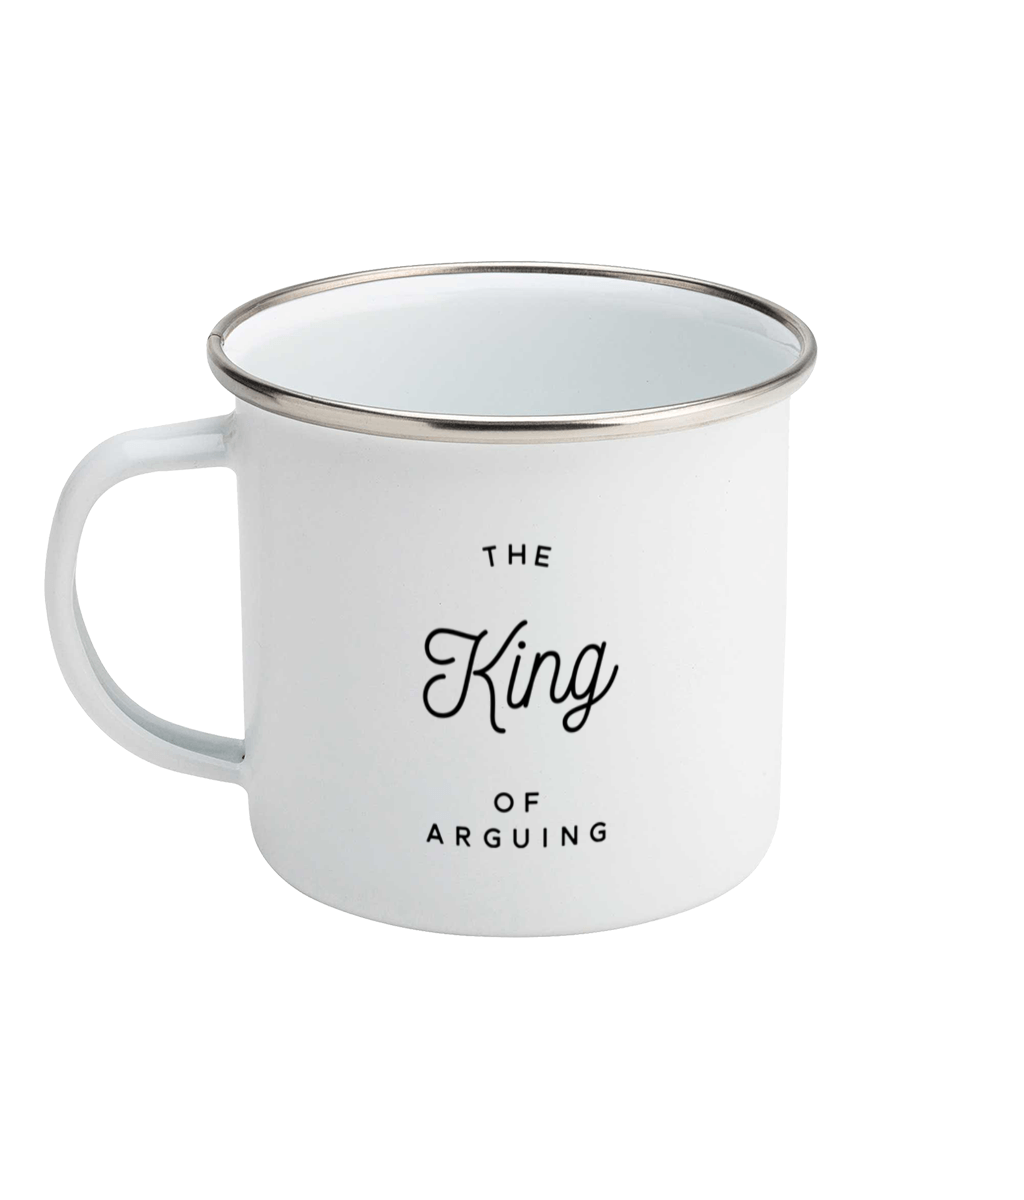 The King of Arguing Original Mug Enamel